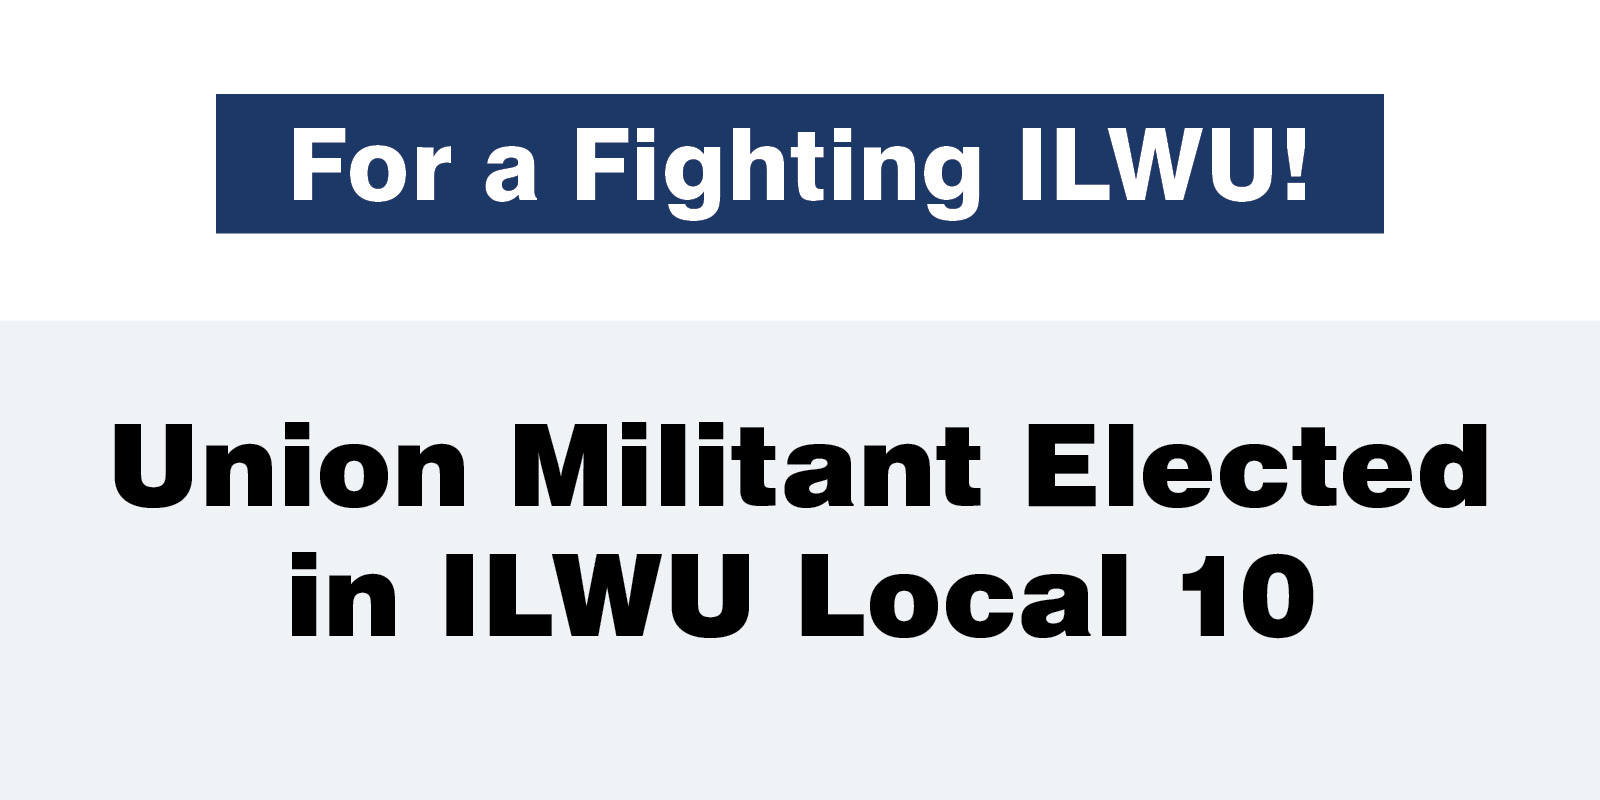 Union Militant Elected in ILWU Local 10